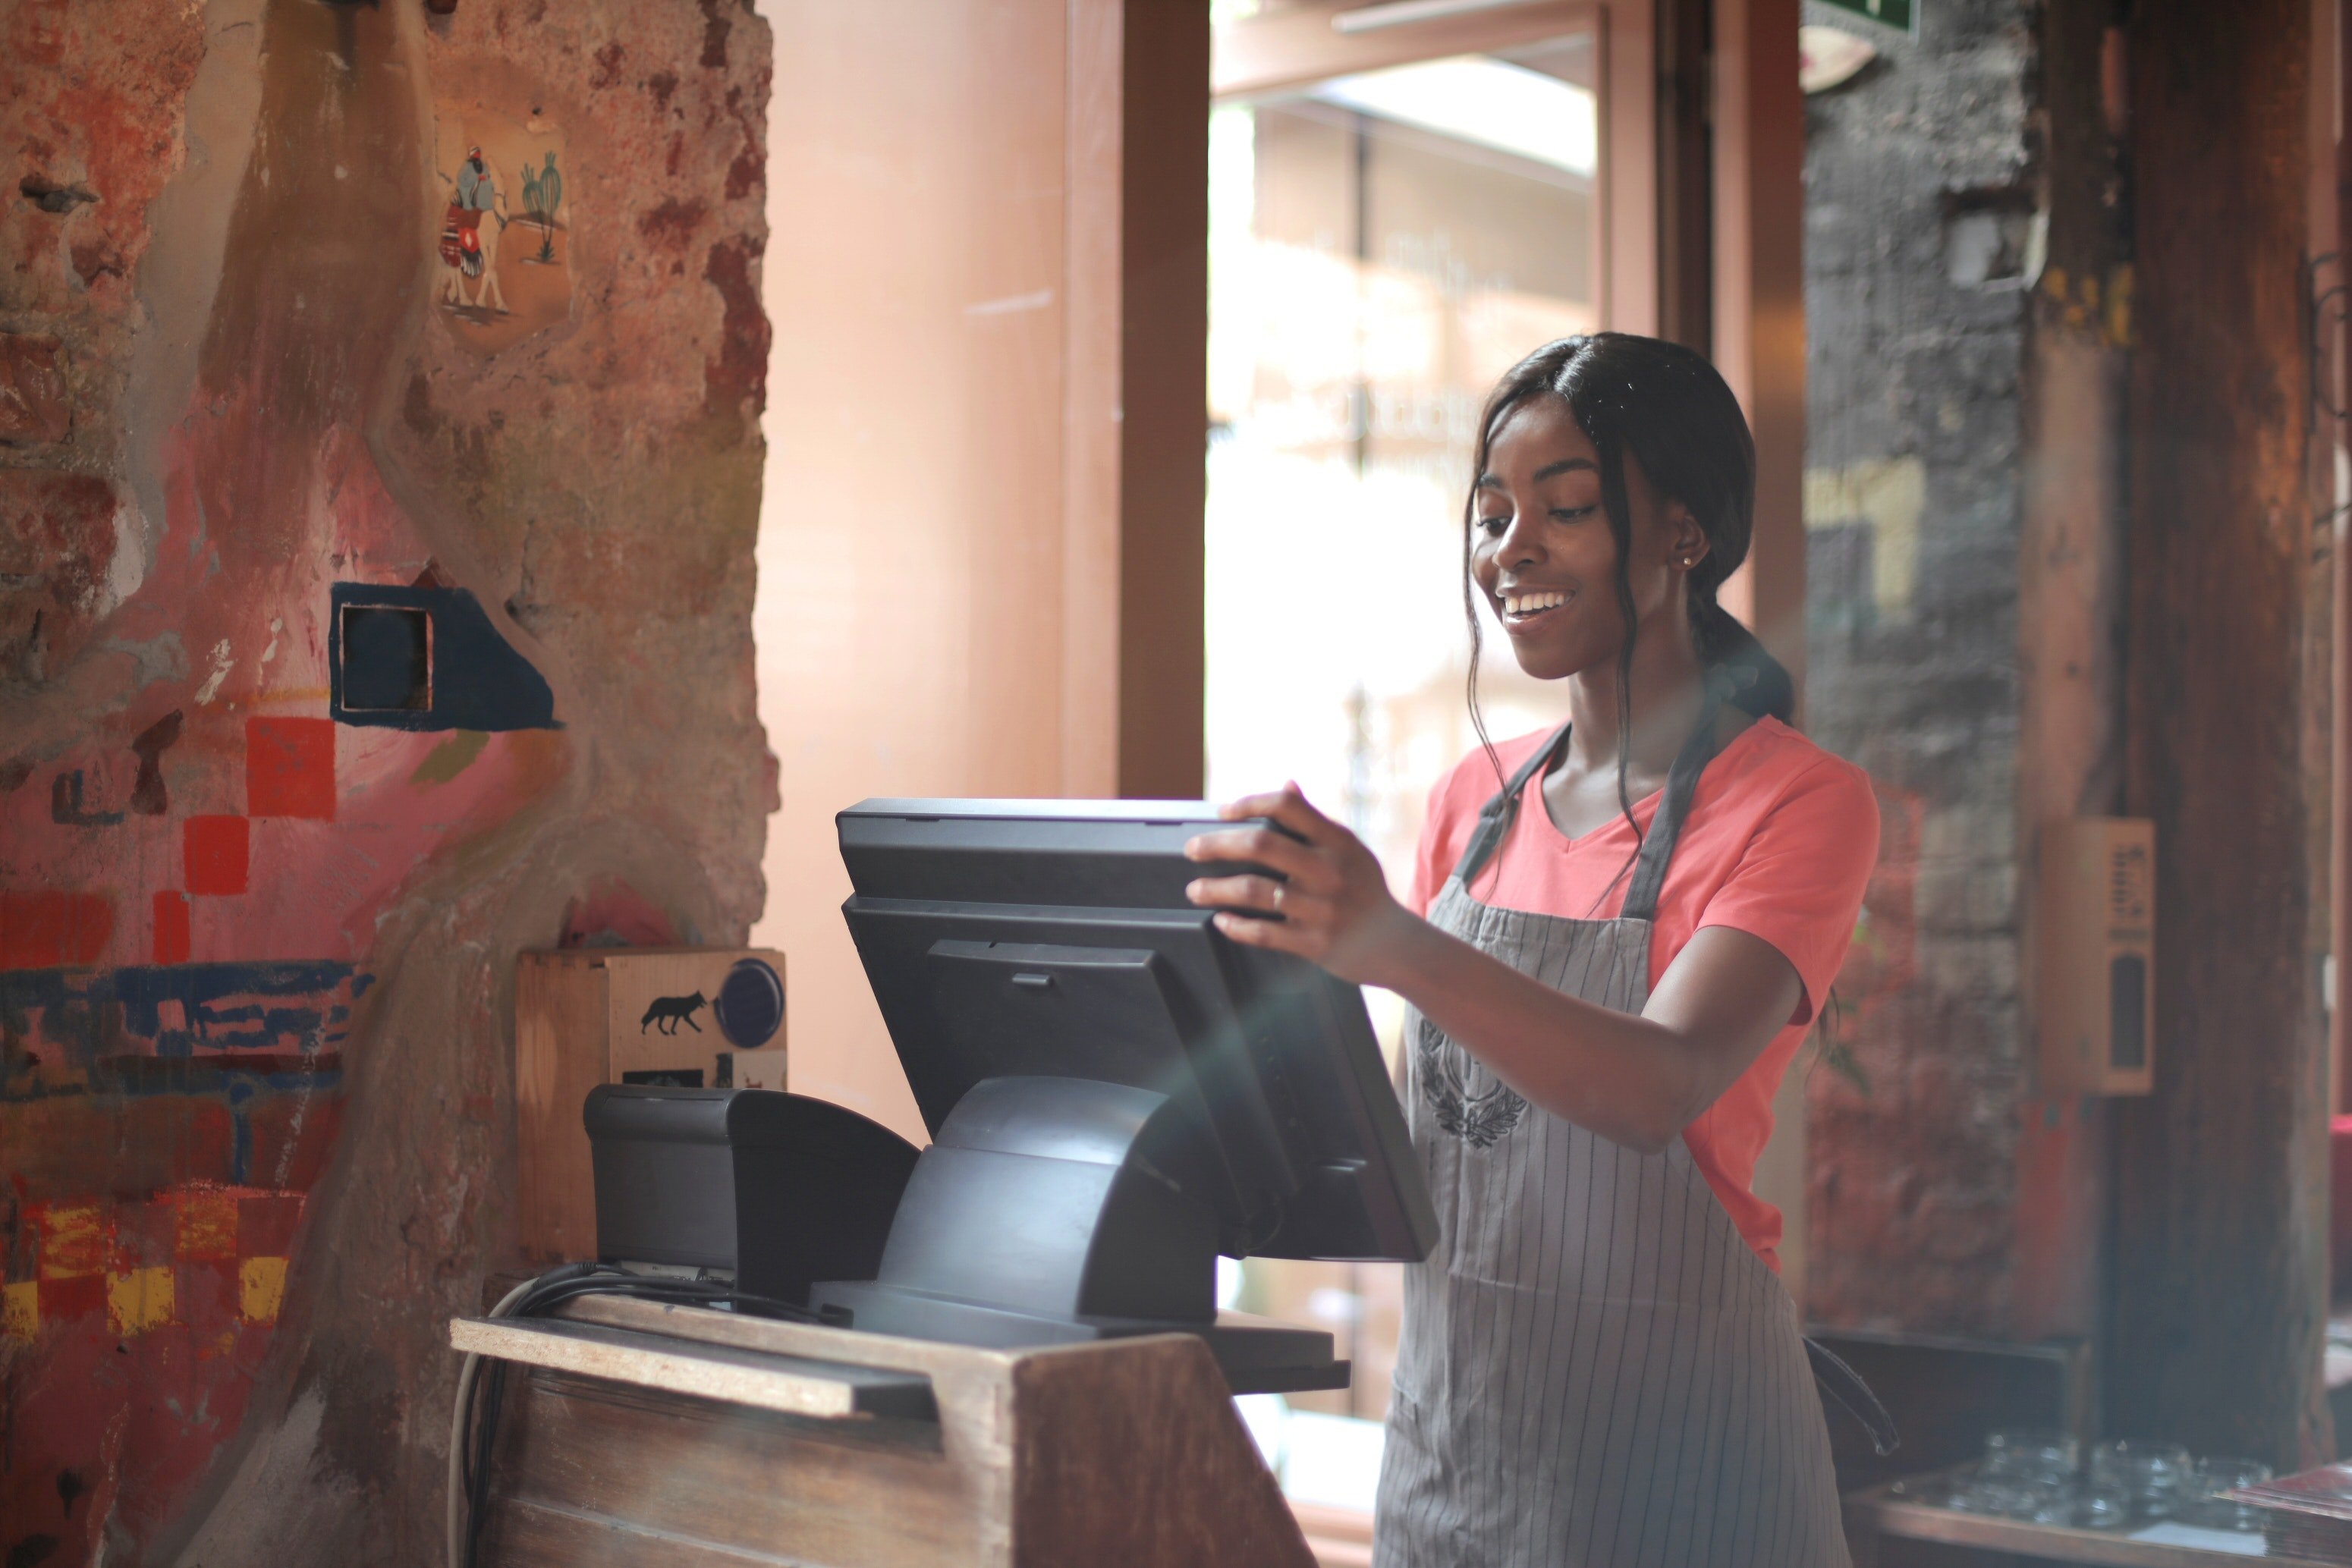 Emma enjoys her job as a cashier. | Source: Pexels